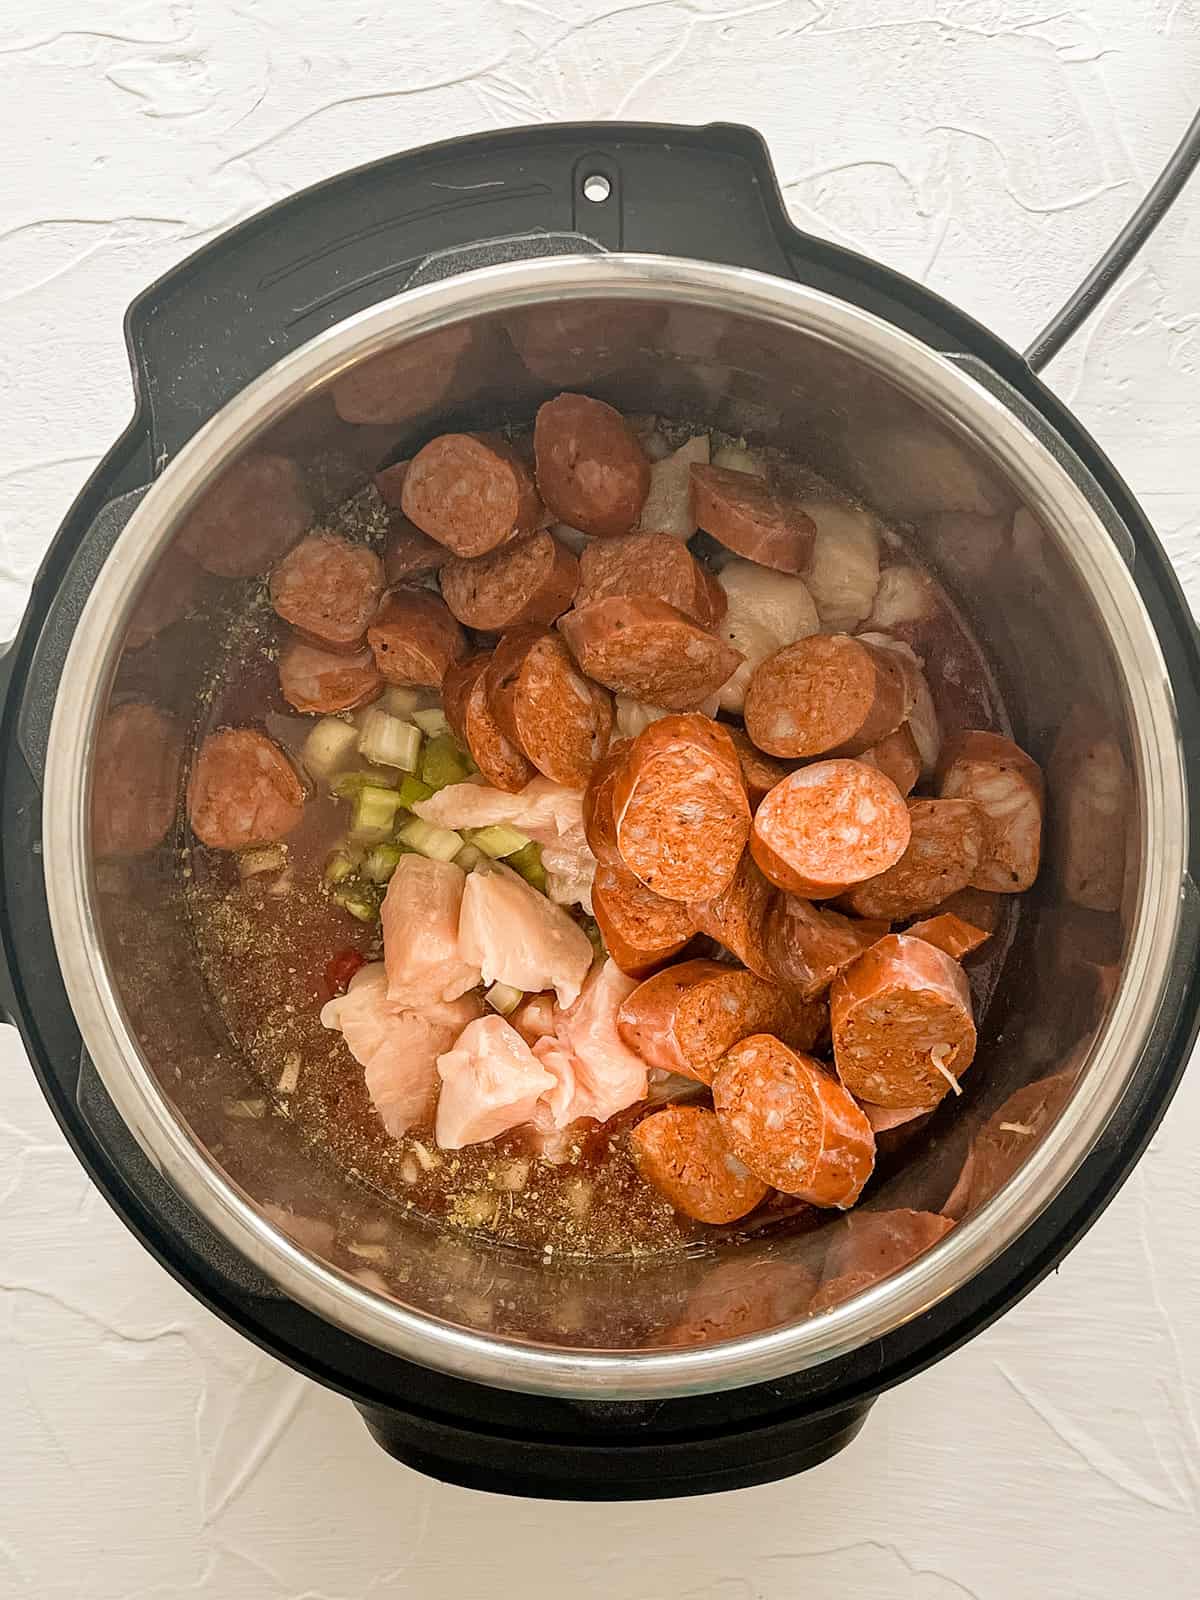 Raw jambalaya ingredients in an Instant Pot.